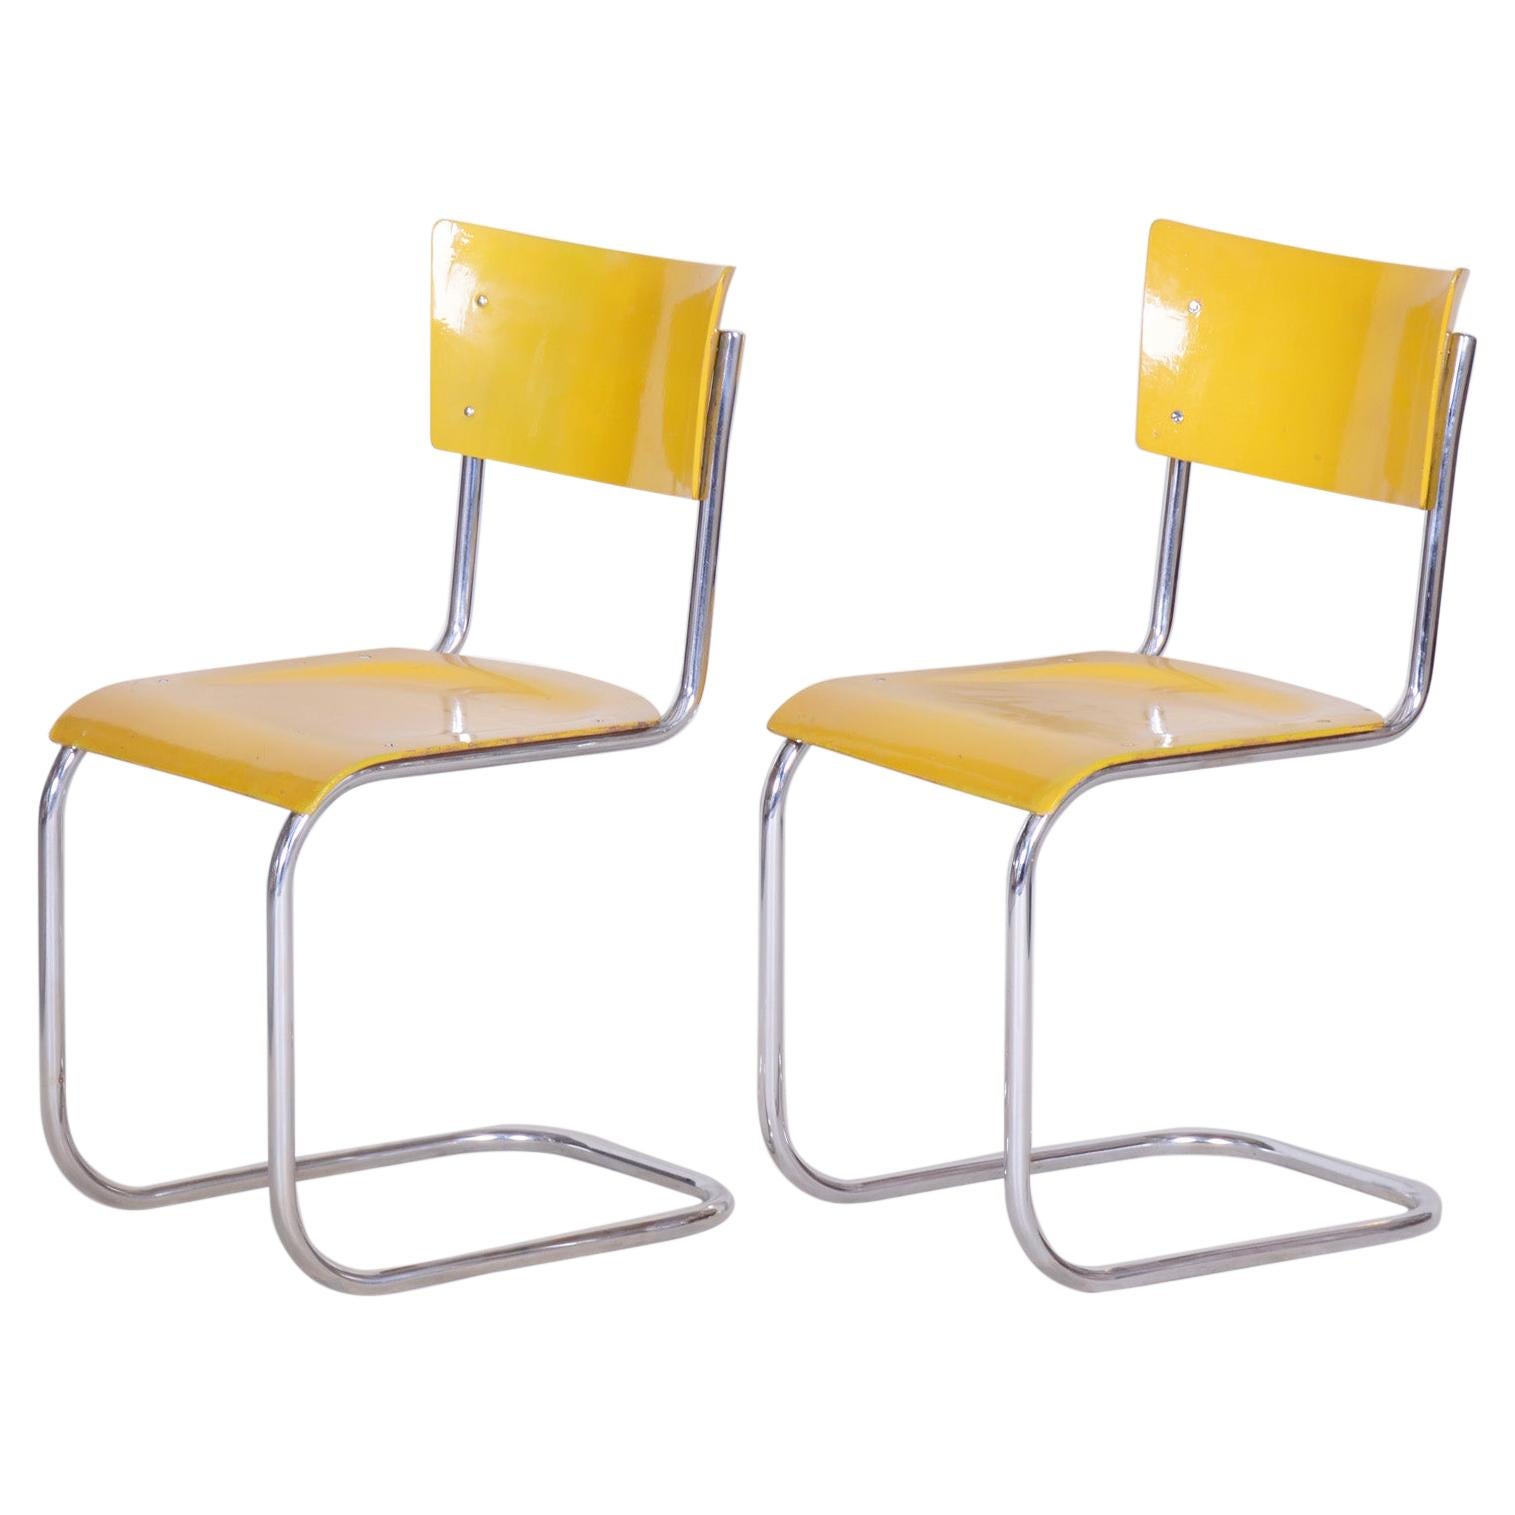 Original Condition Czech Bauhaus Yellow Pair of Chairs by Mart Stam, 1930s